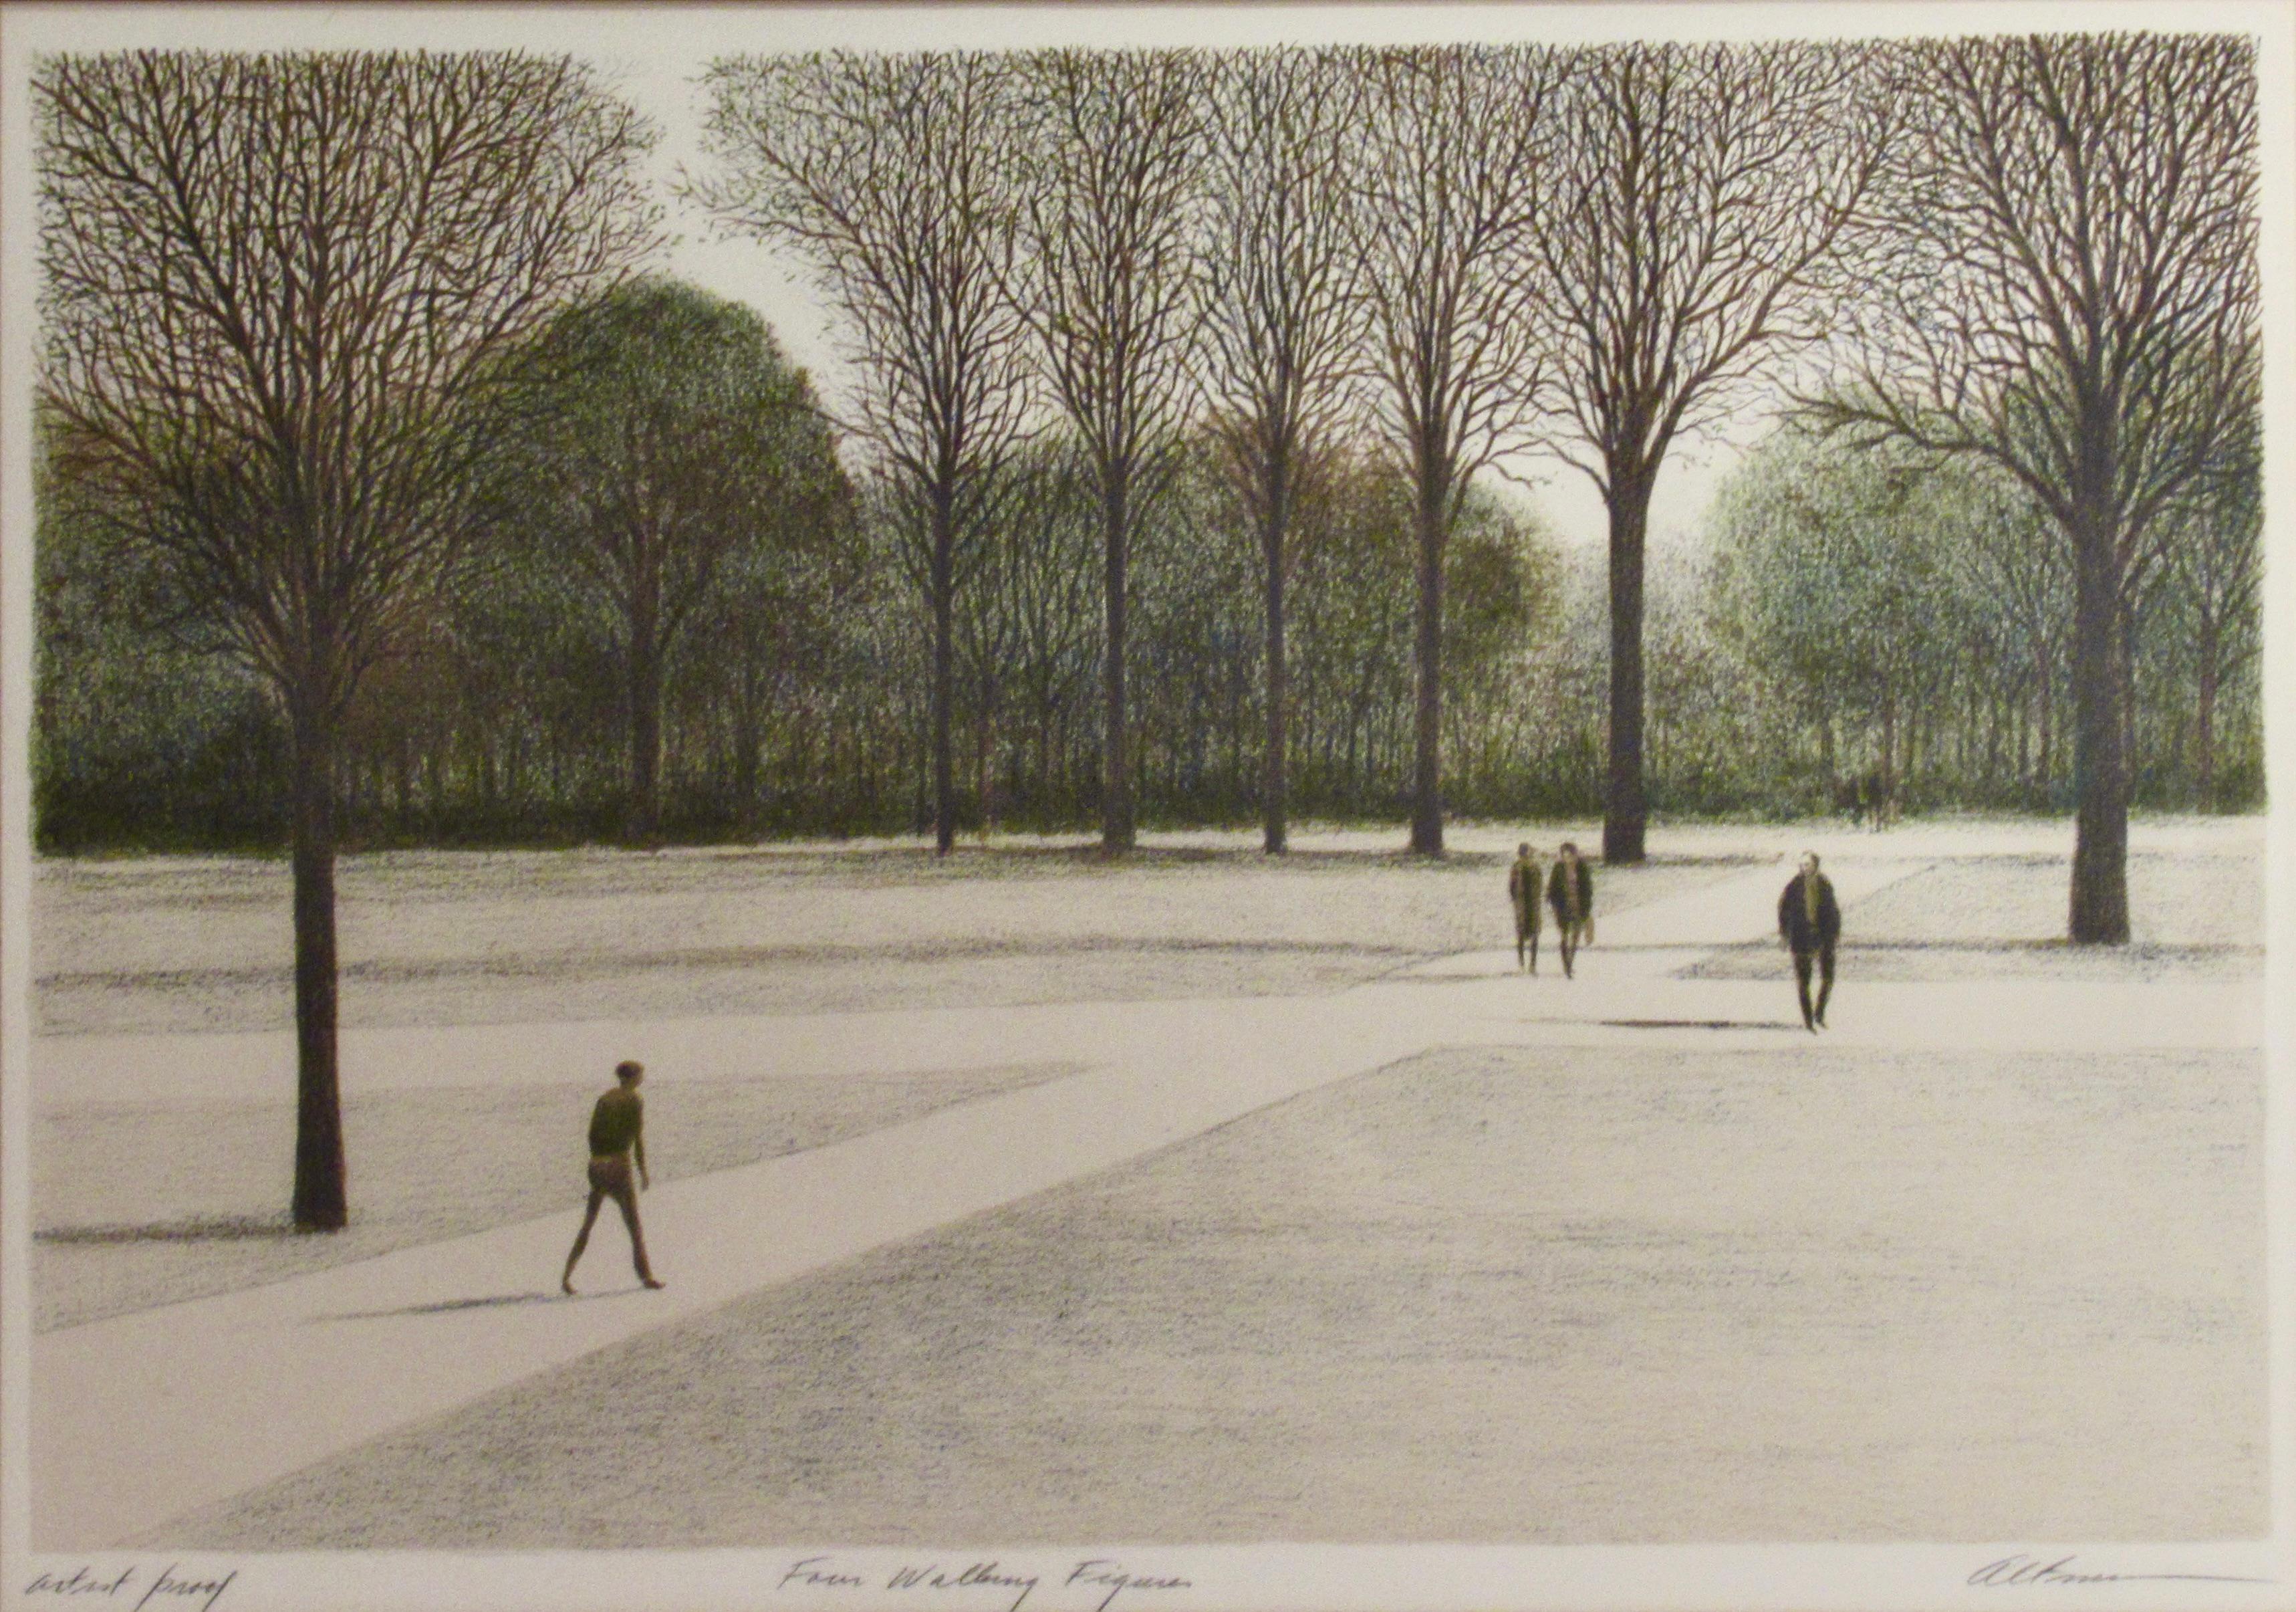 Four Walking Figures - Print by Harold Altman